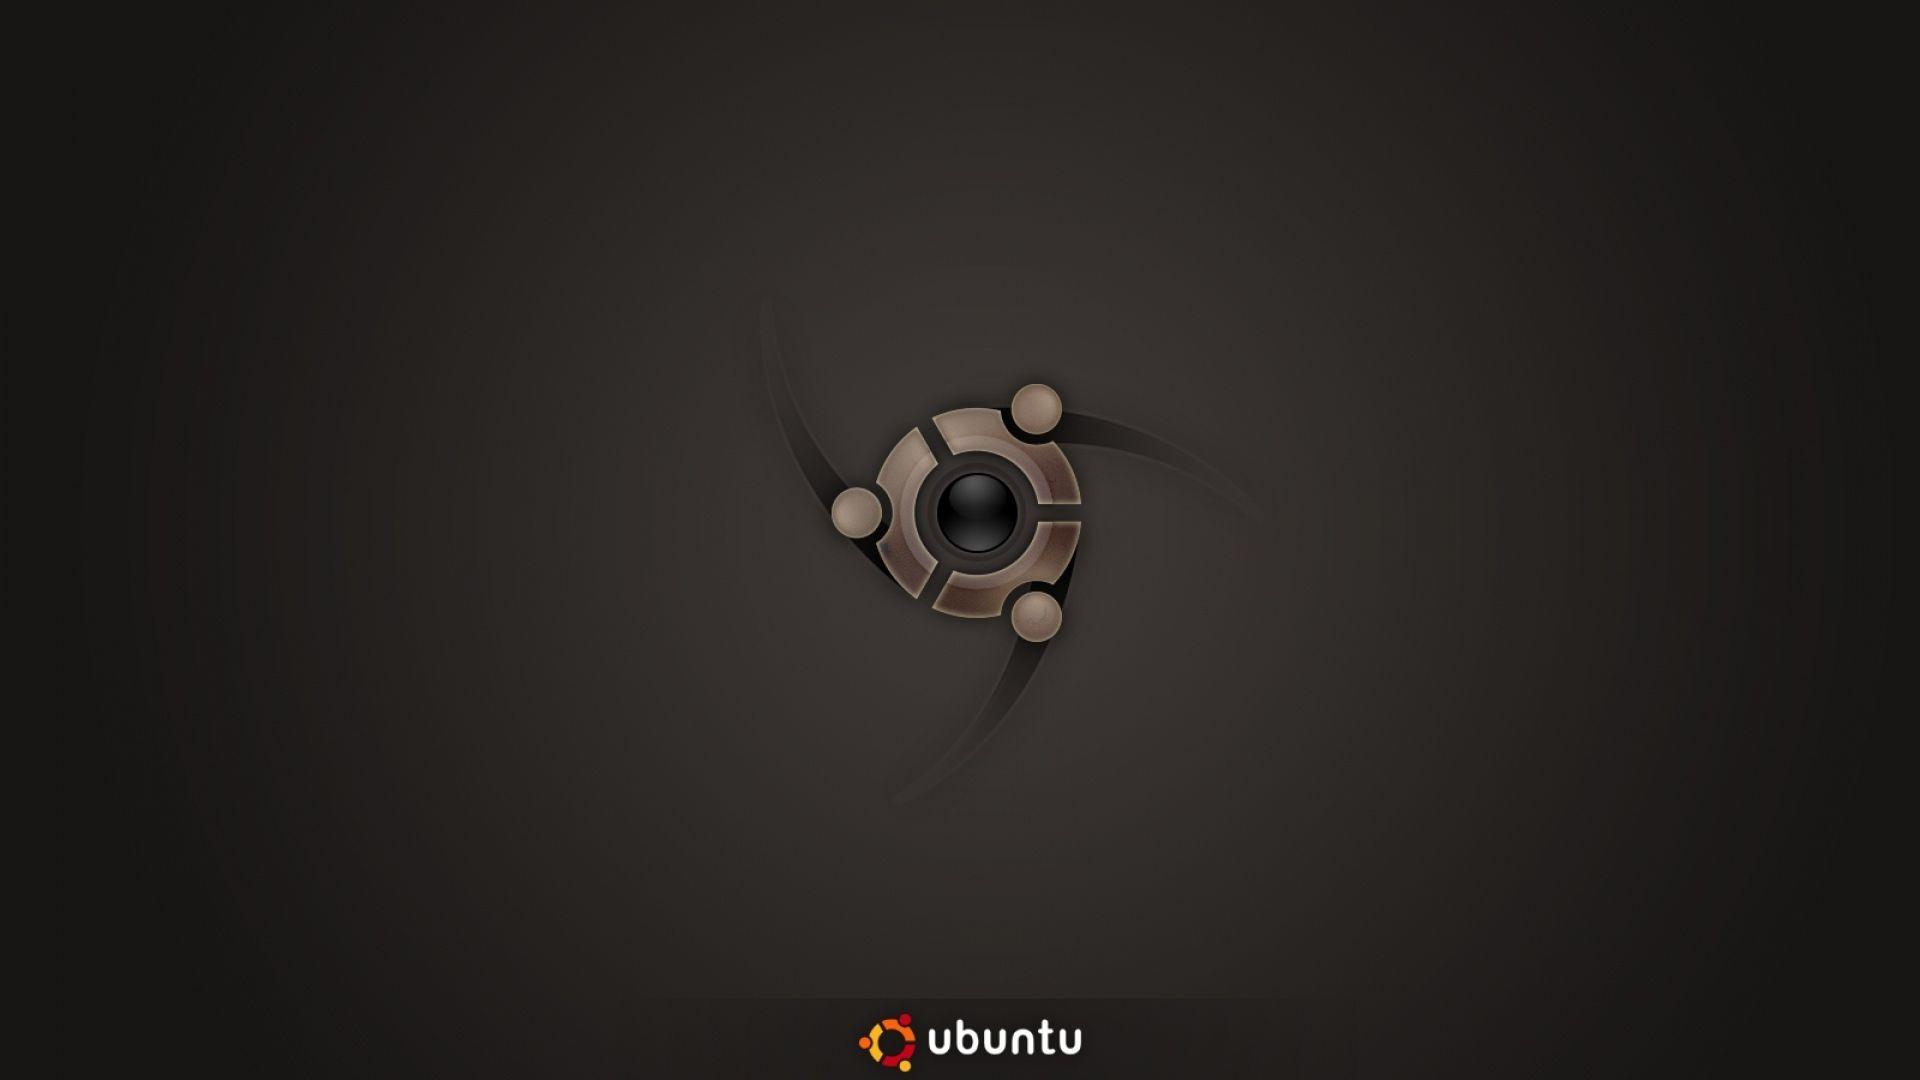 paulbarford heritage the ruth Ubuntu Wallpaper HD in 2019